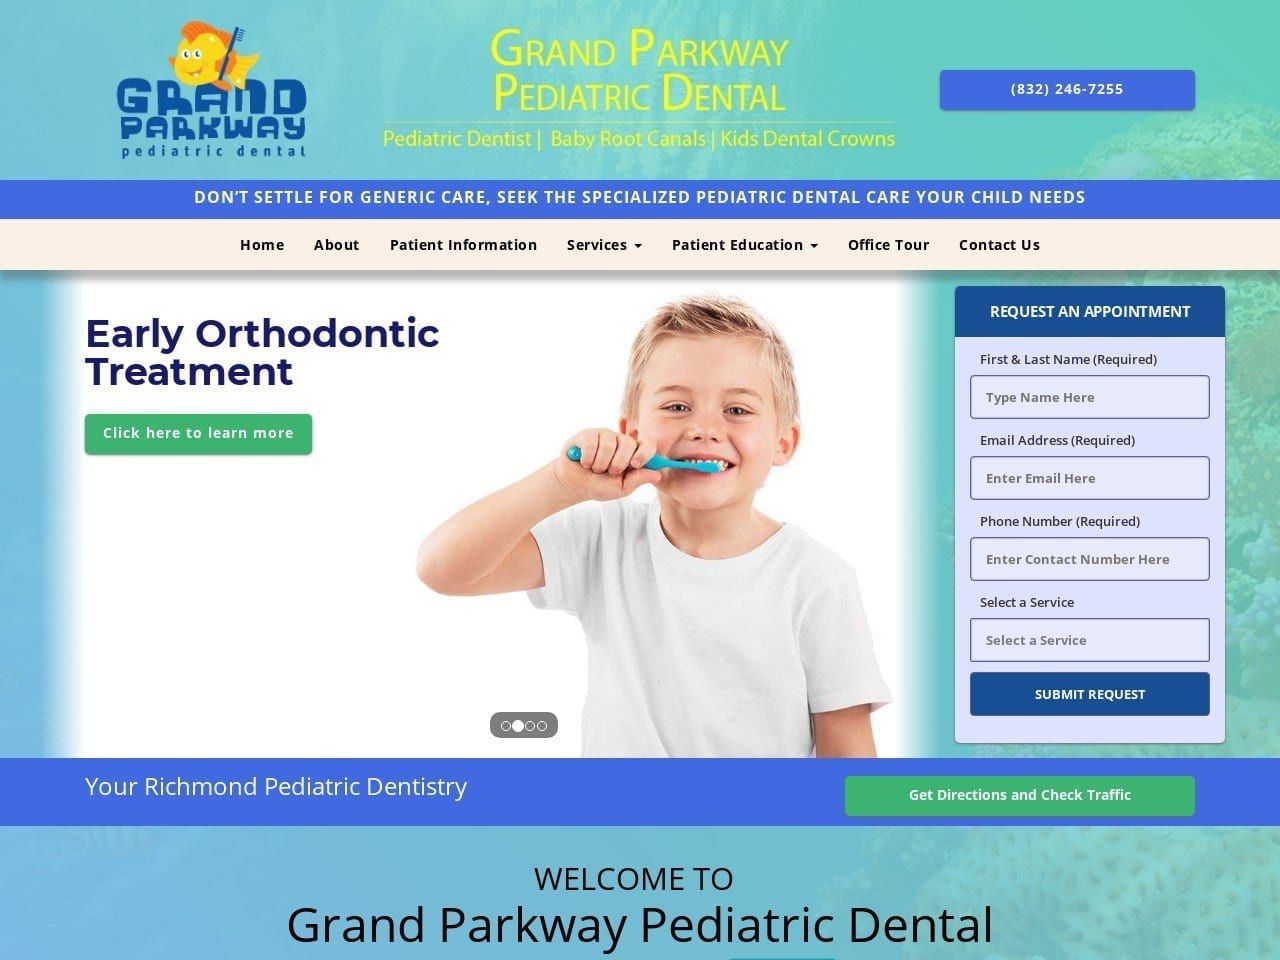 Grand Parkway Pediatric Dental Website Screenshot from grandparkwaypediatricdental.com